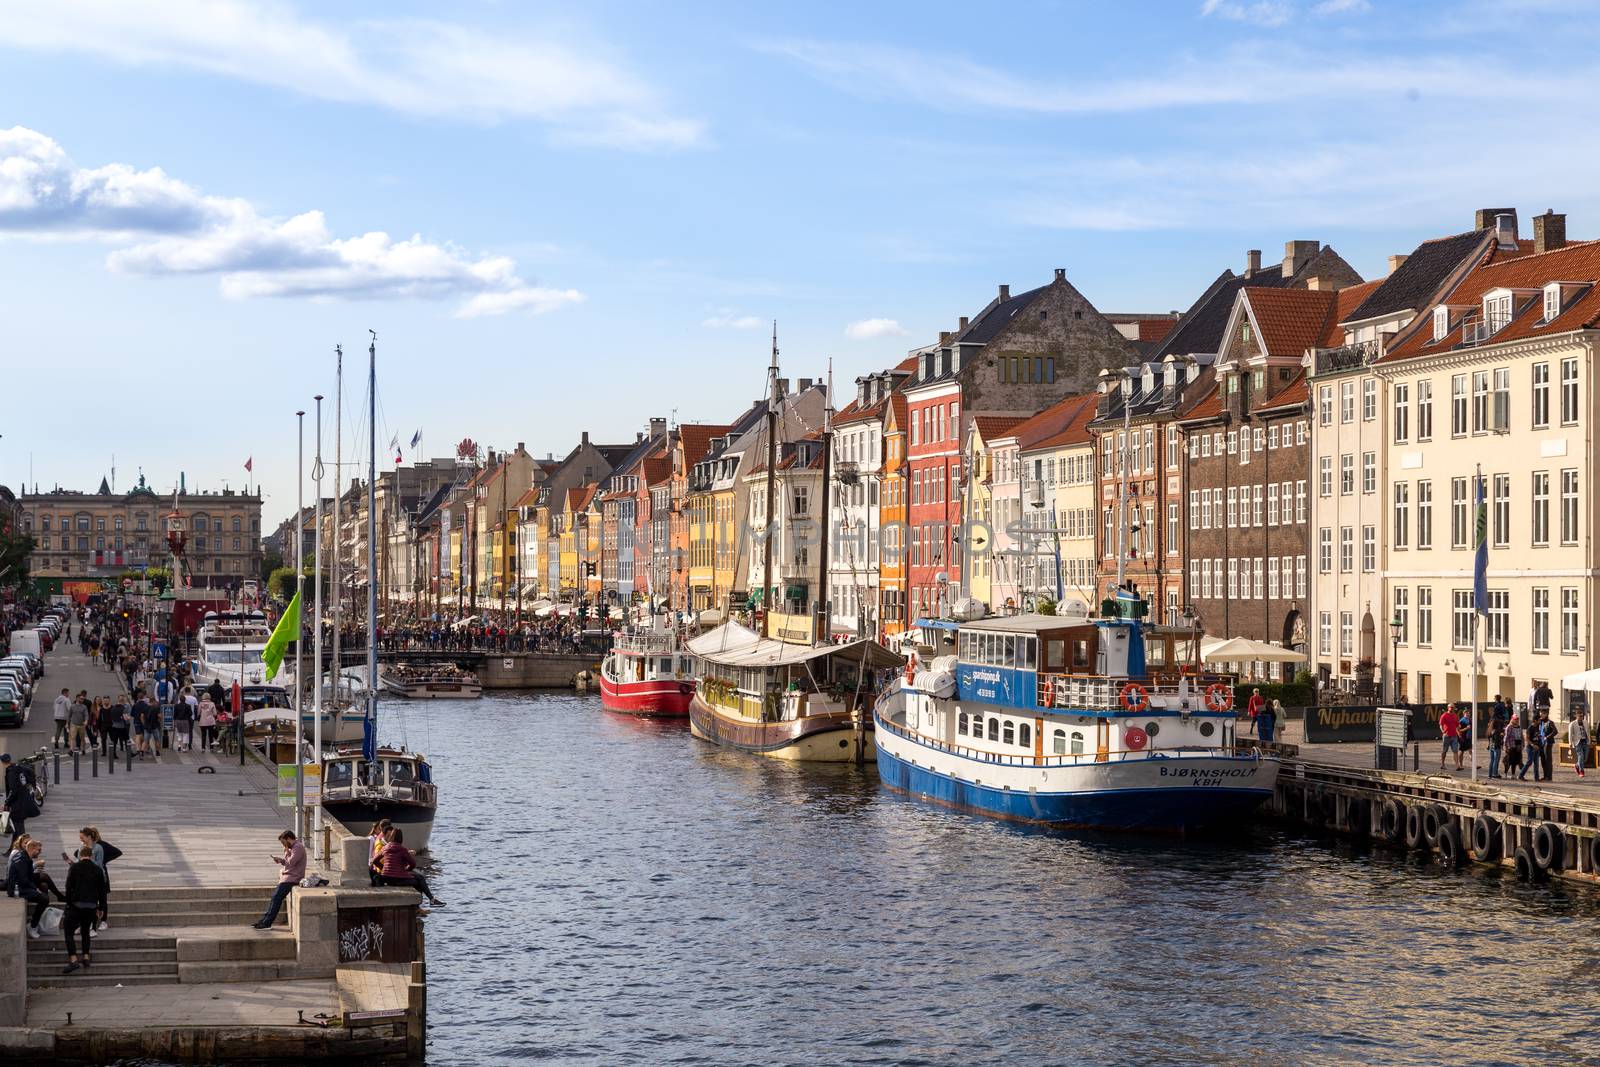 Copenhagen, Denmark - September 02, 2017: Famous Nyhavn harbor with boats in the historical city centre